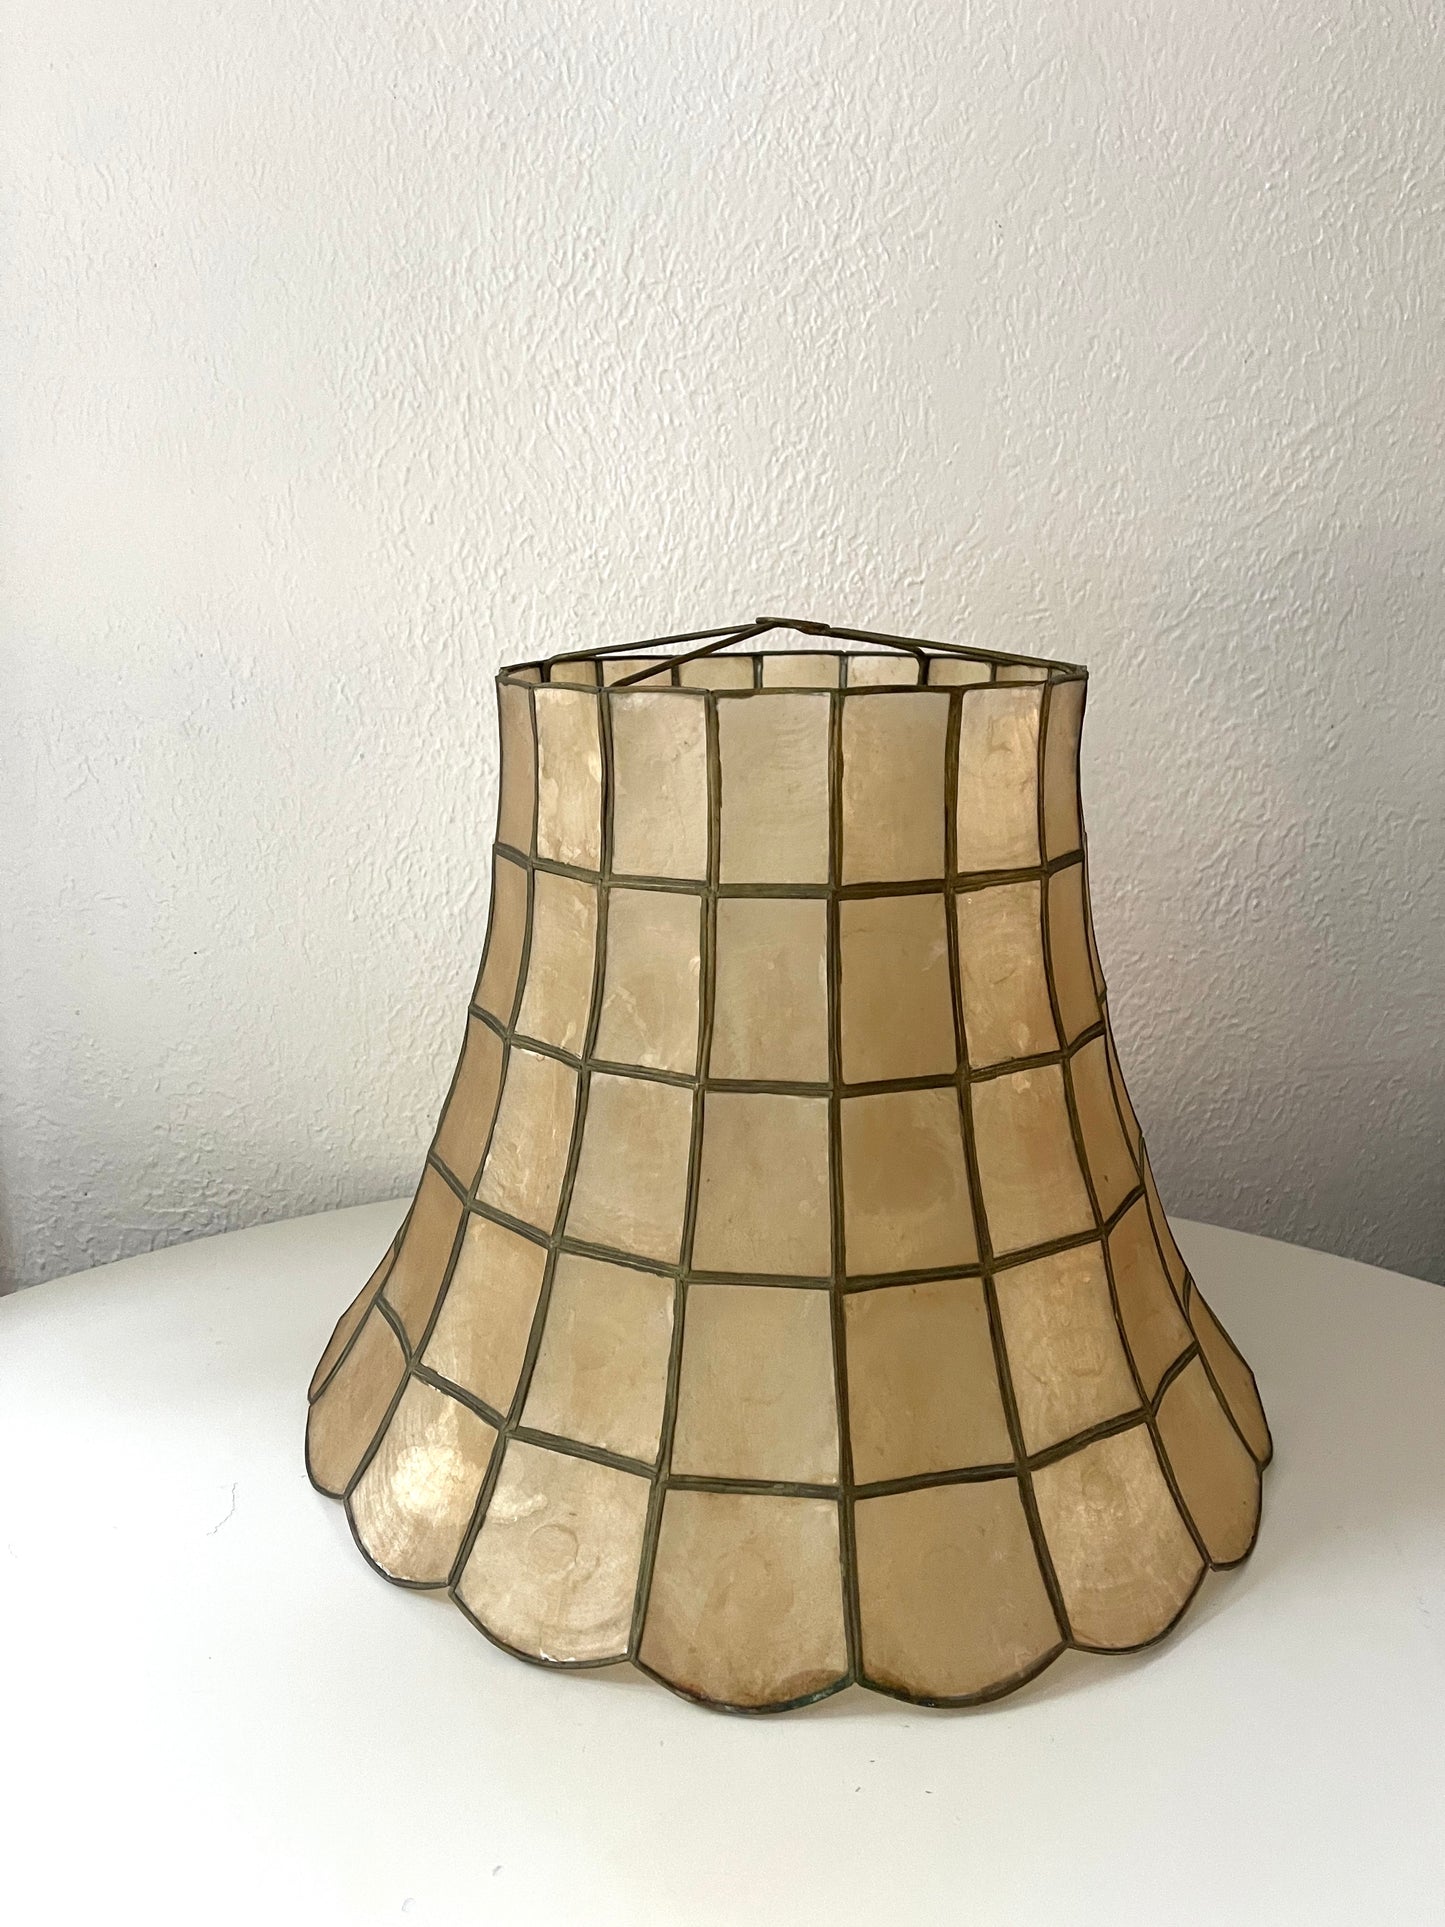 Capiz shell lamp shade w/ Brass & Scalloped bottoms edge